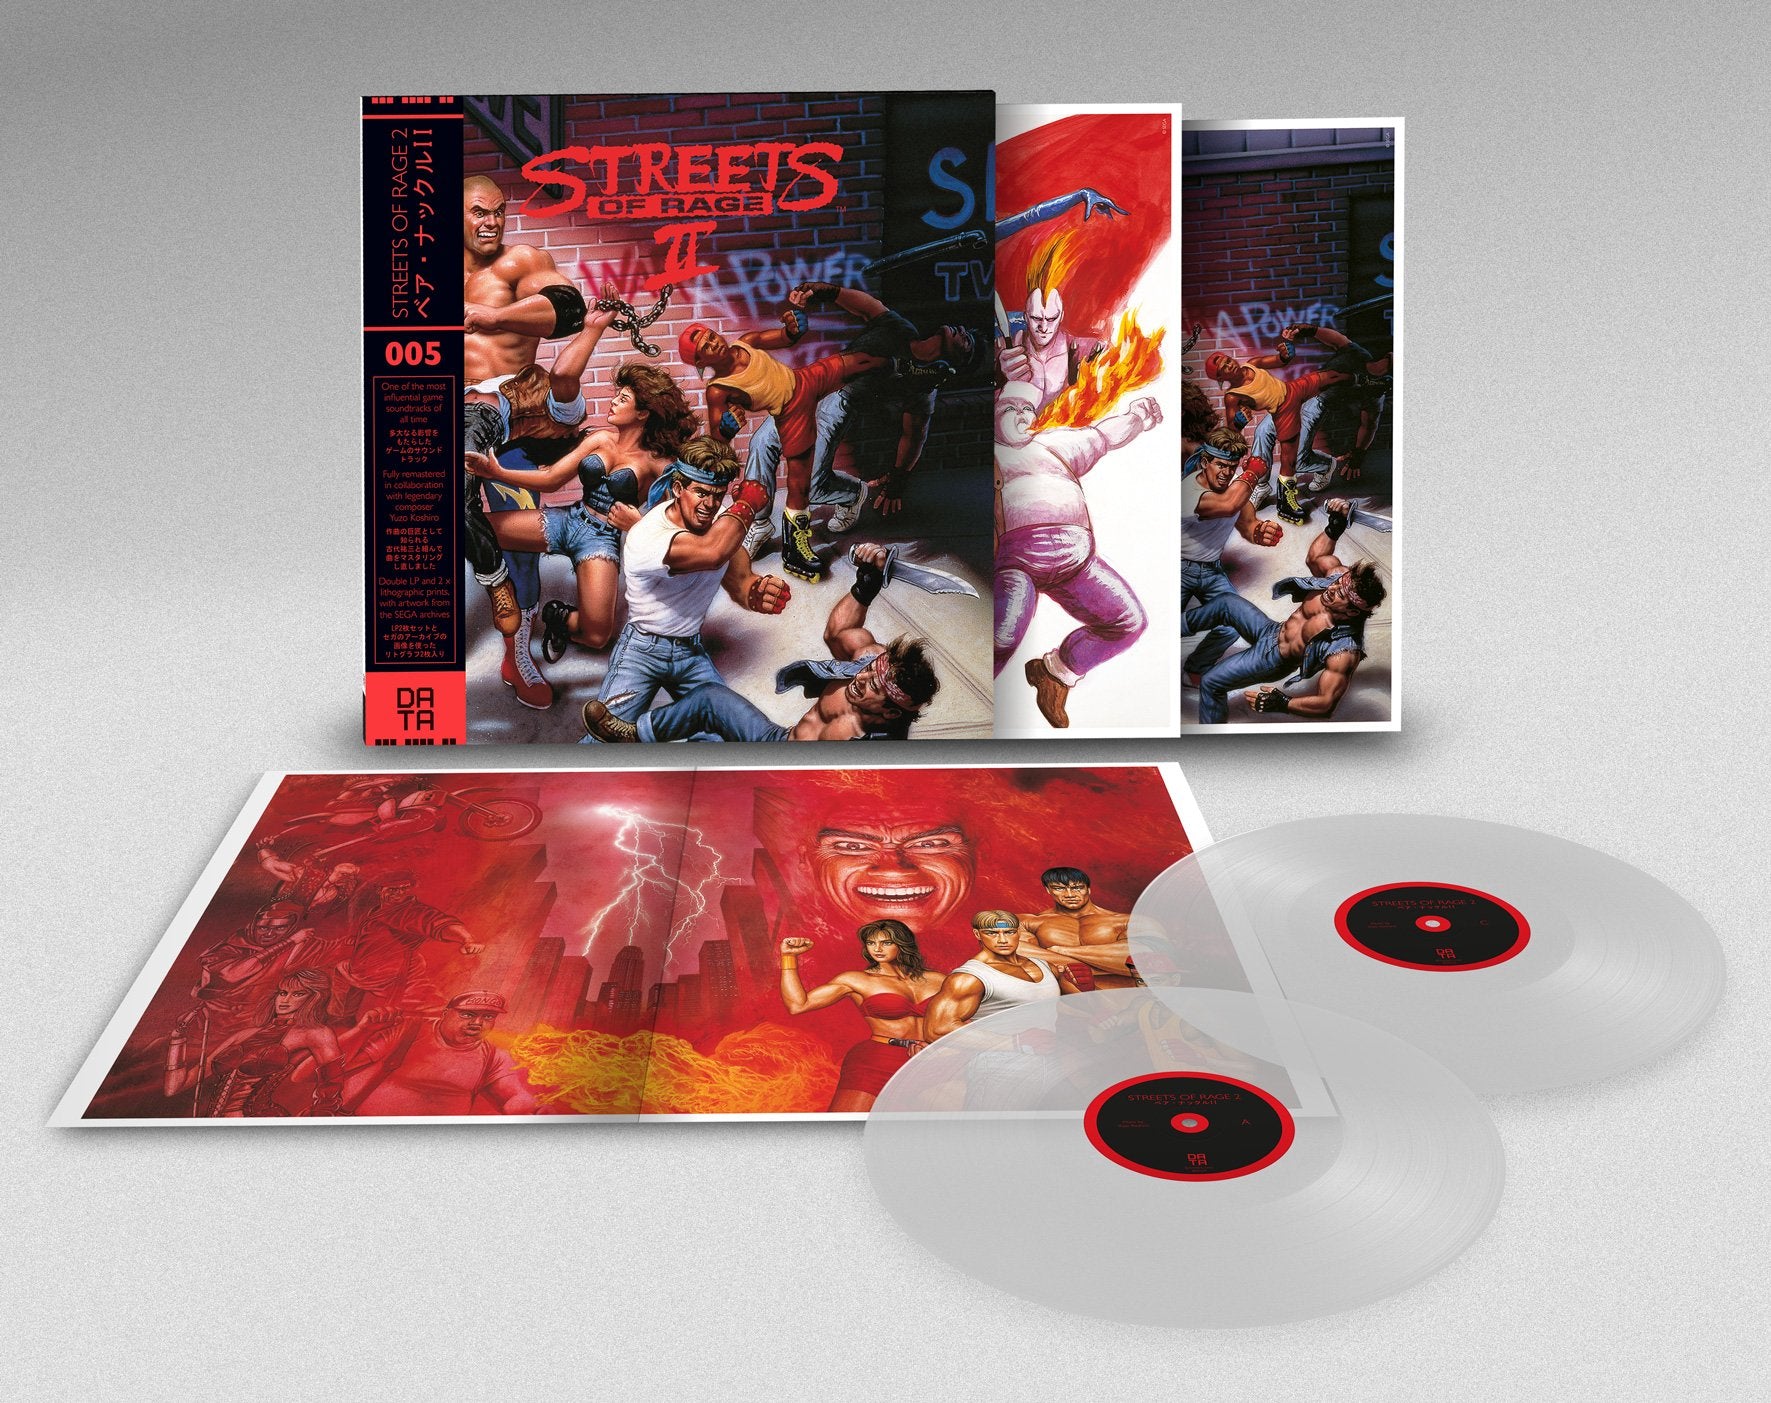 Streets of Rage 2 Video Game Vinyl Soundtrack 2xLP